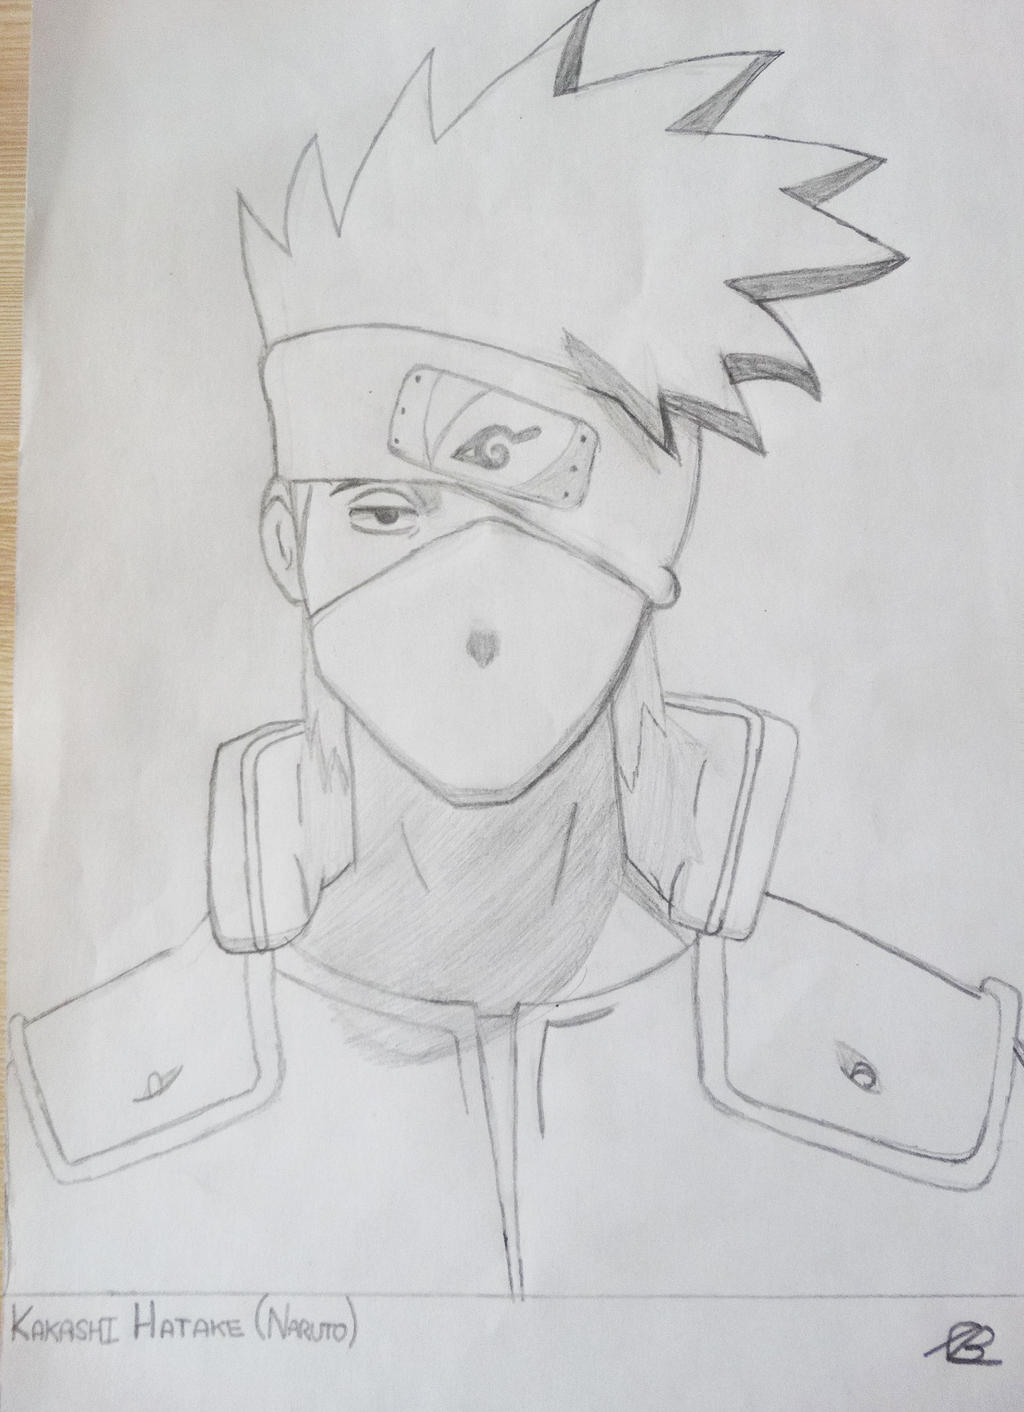 How to draw Kakashi Hatake from Naruto anime